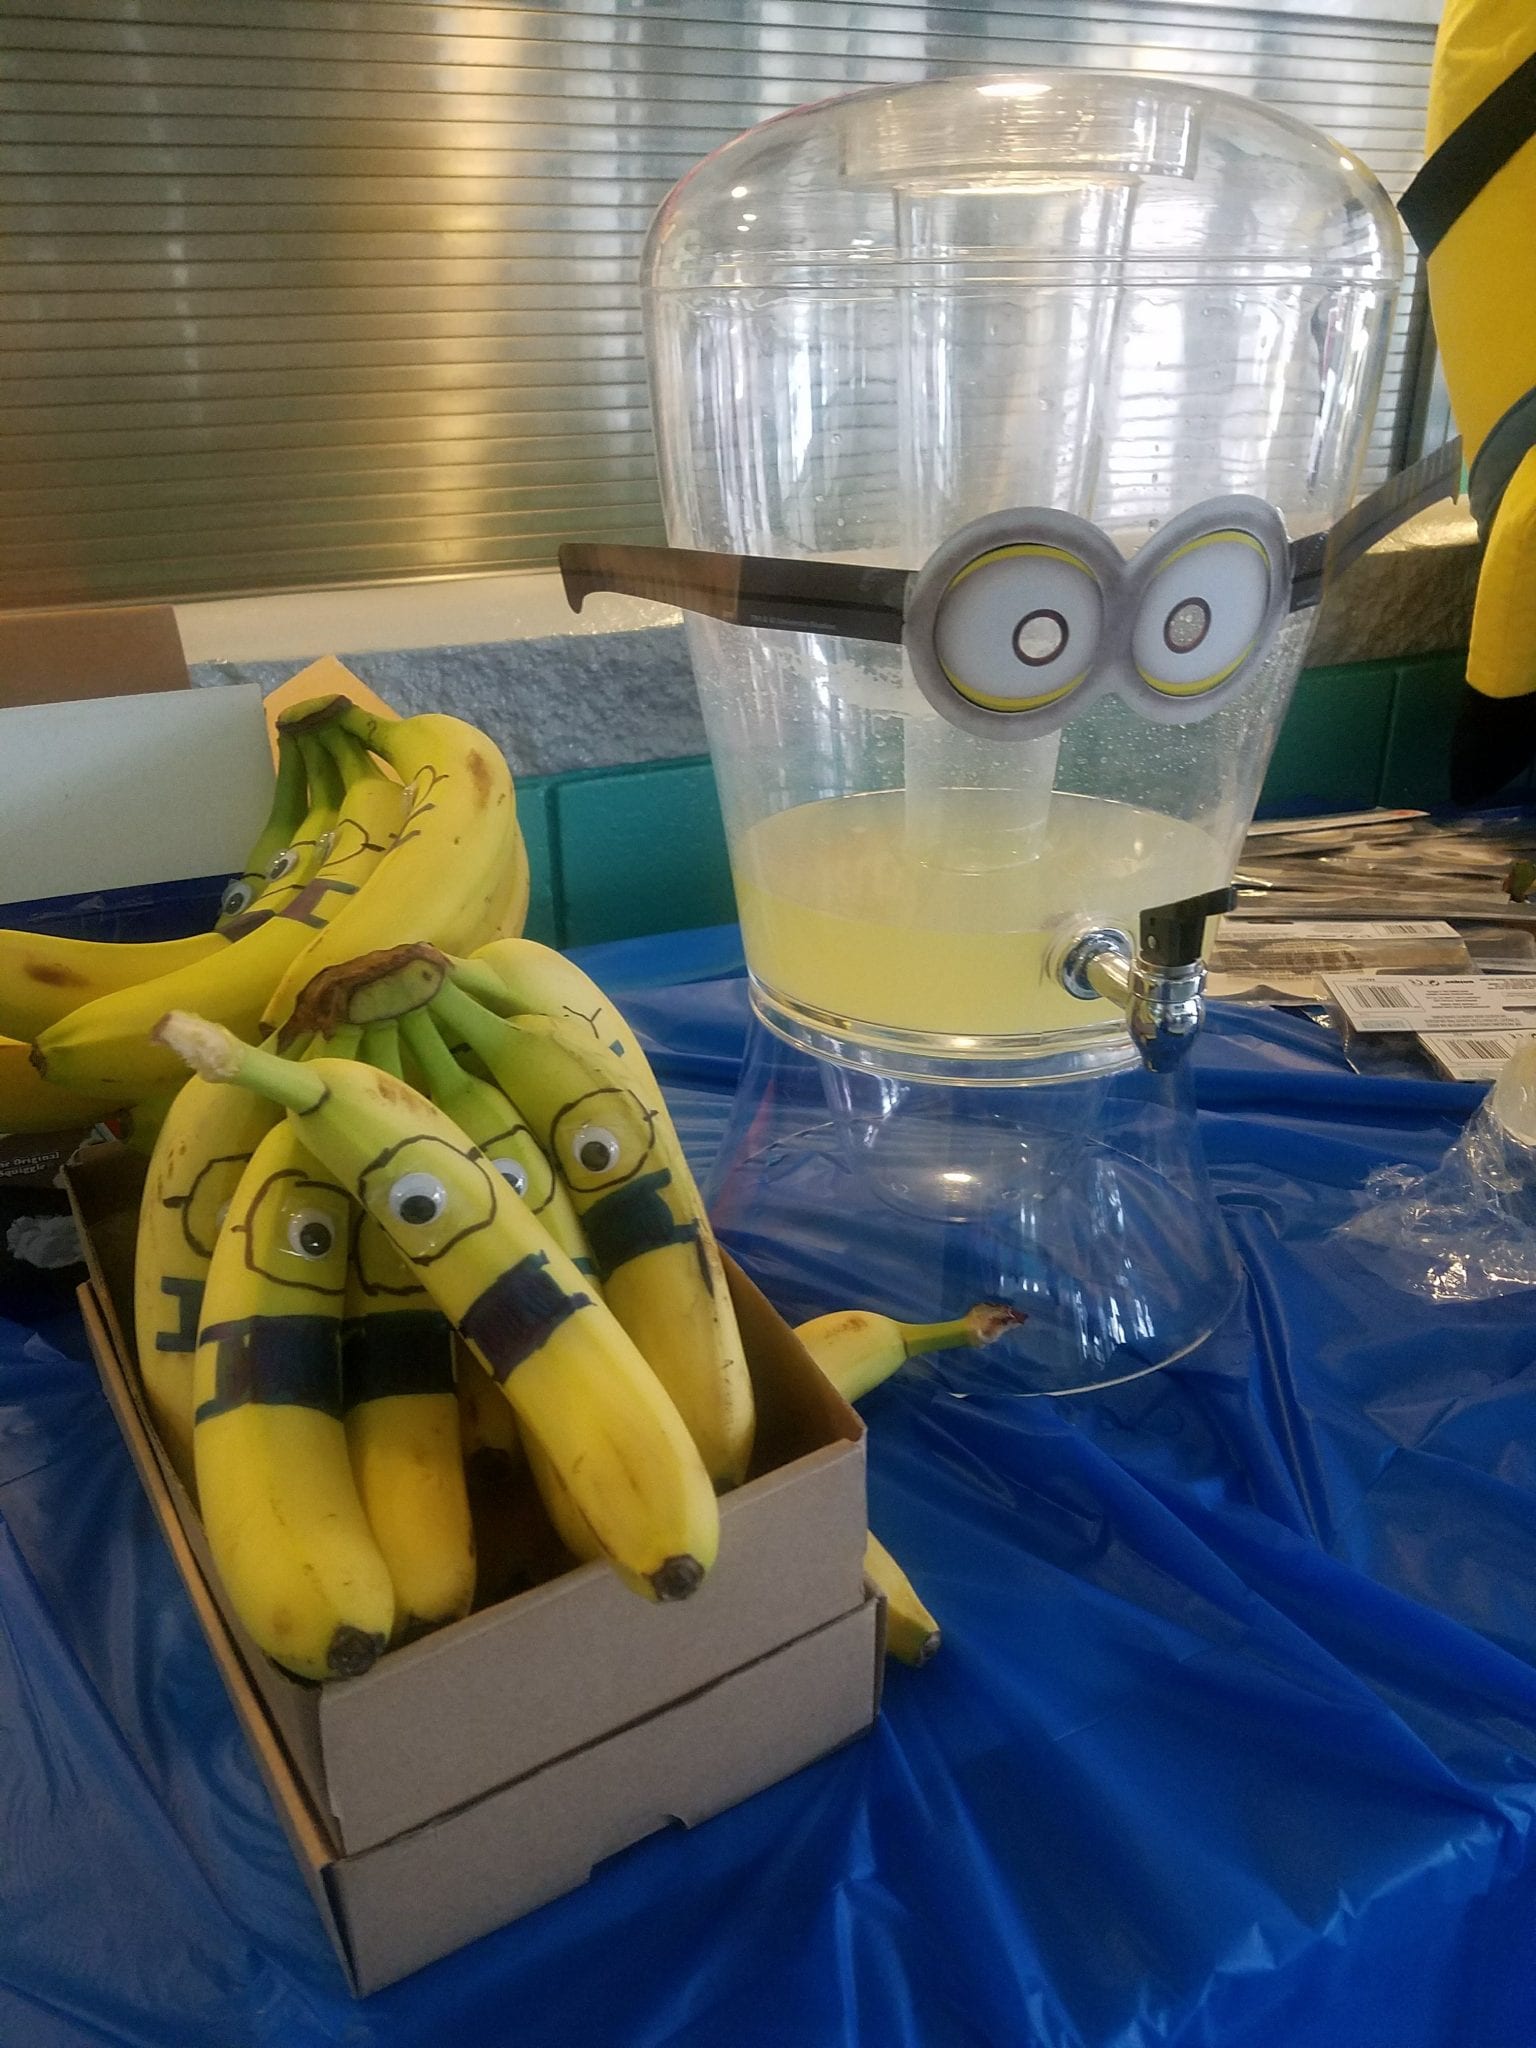 Minion lemonade and bananas